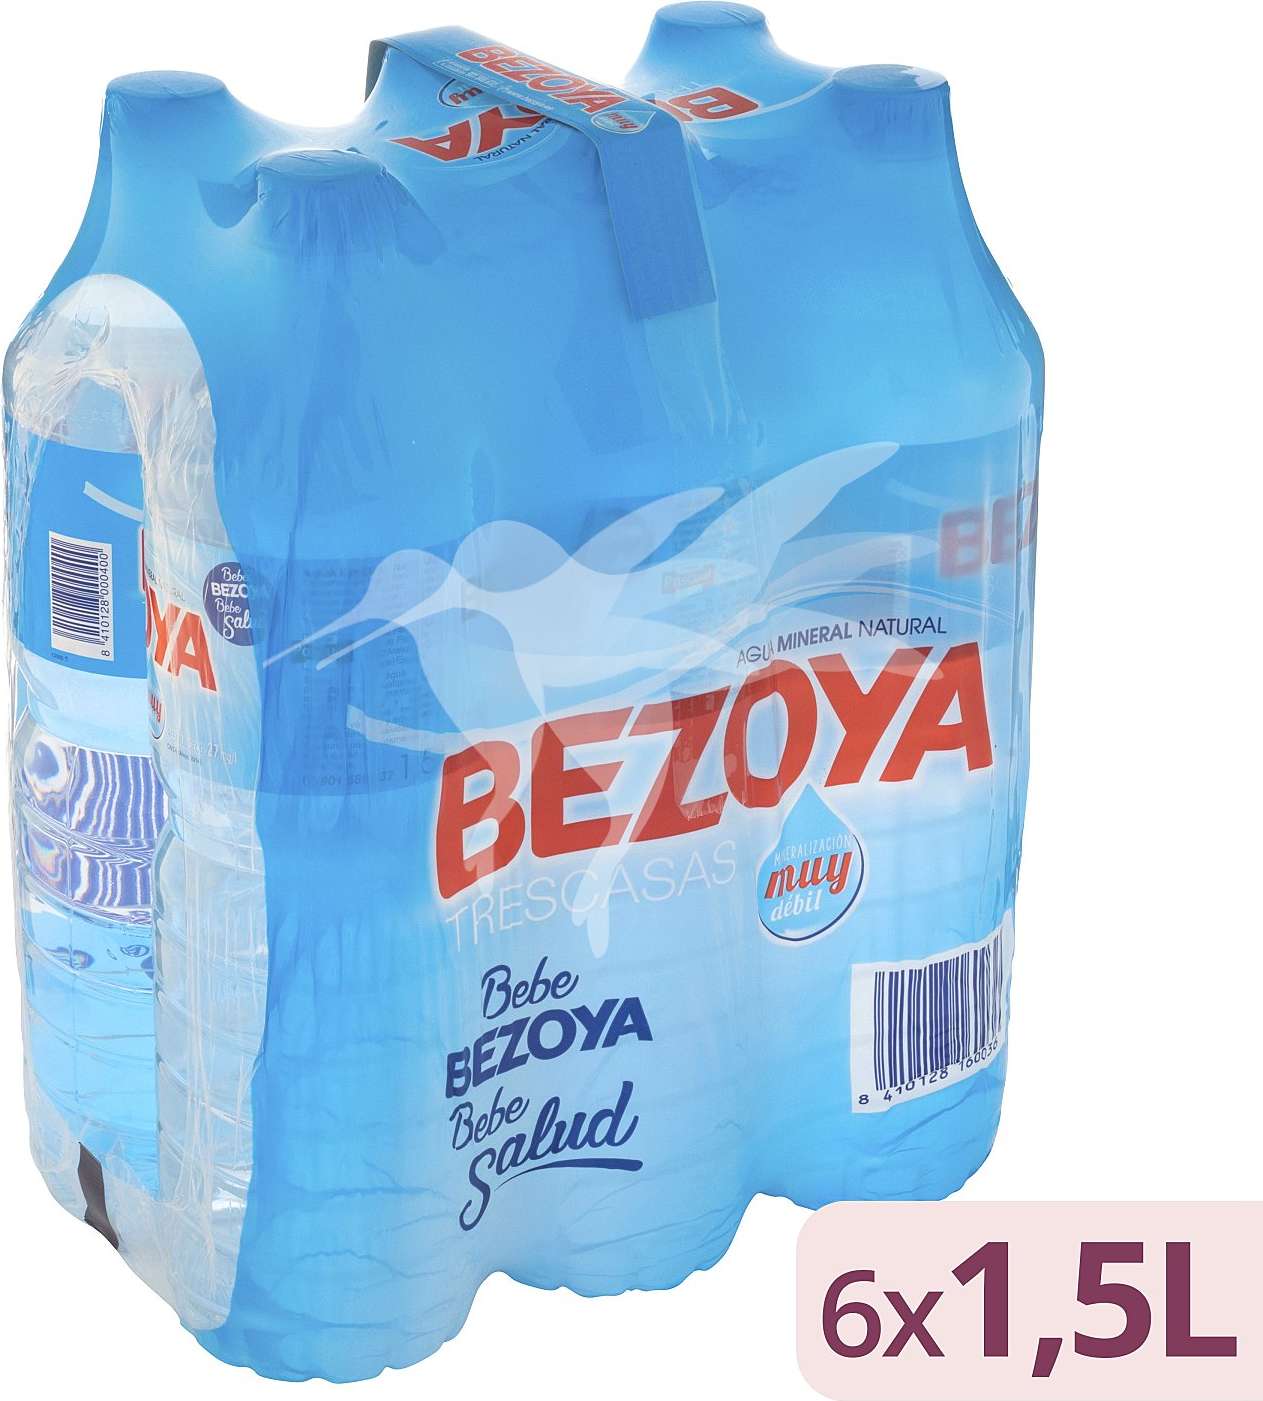 Agua Bezoya pack 6x 1,5l